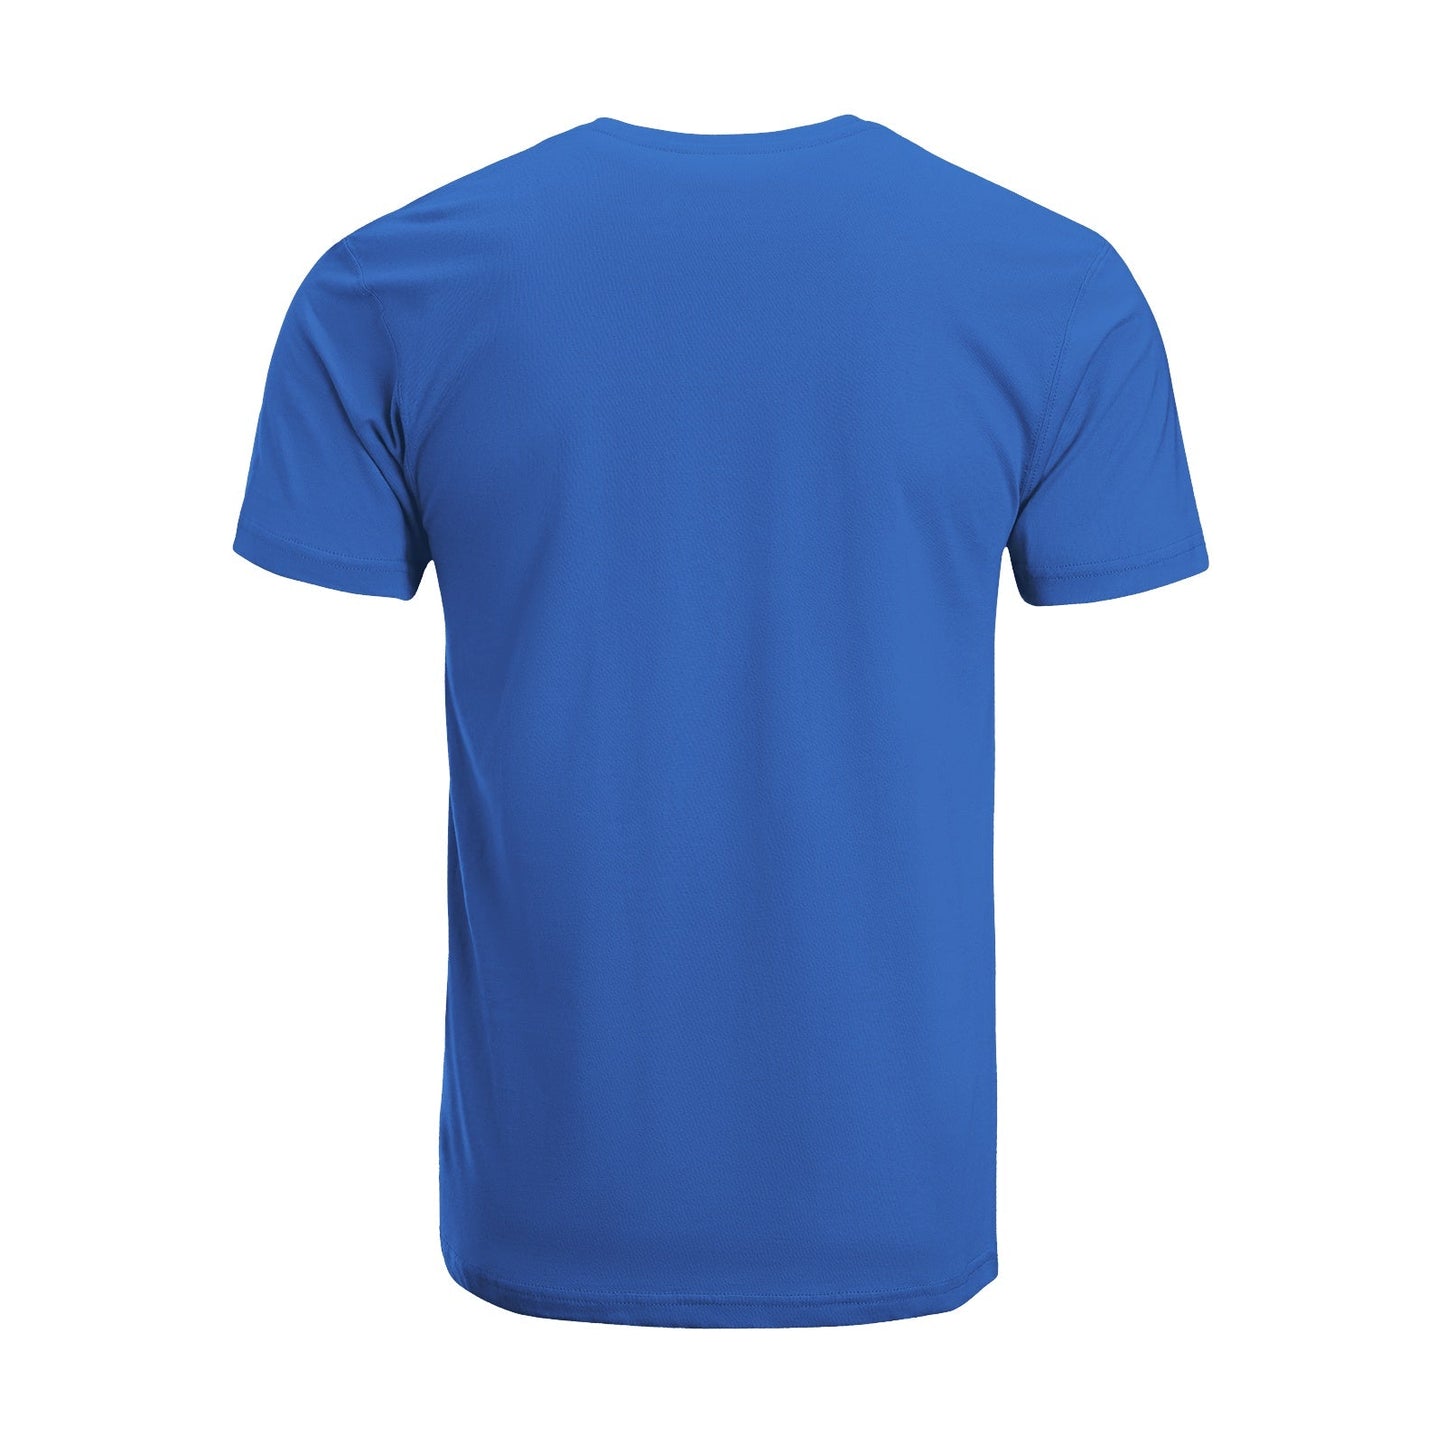 Unisex Short Sleeve Crew Neck Cotton Jersey T-Shirt Gym No. 24 - Tara-Outfits.com